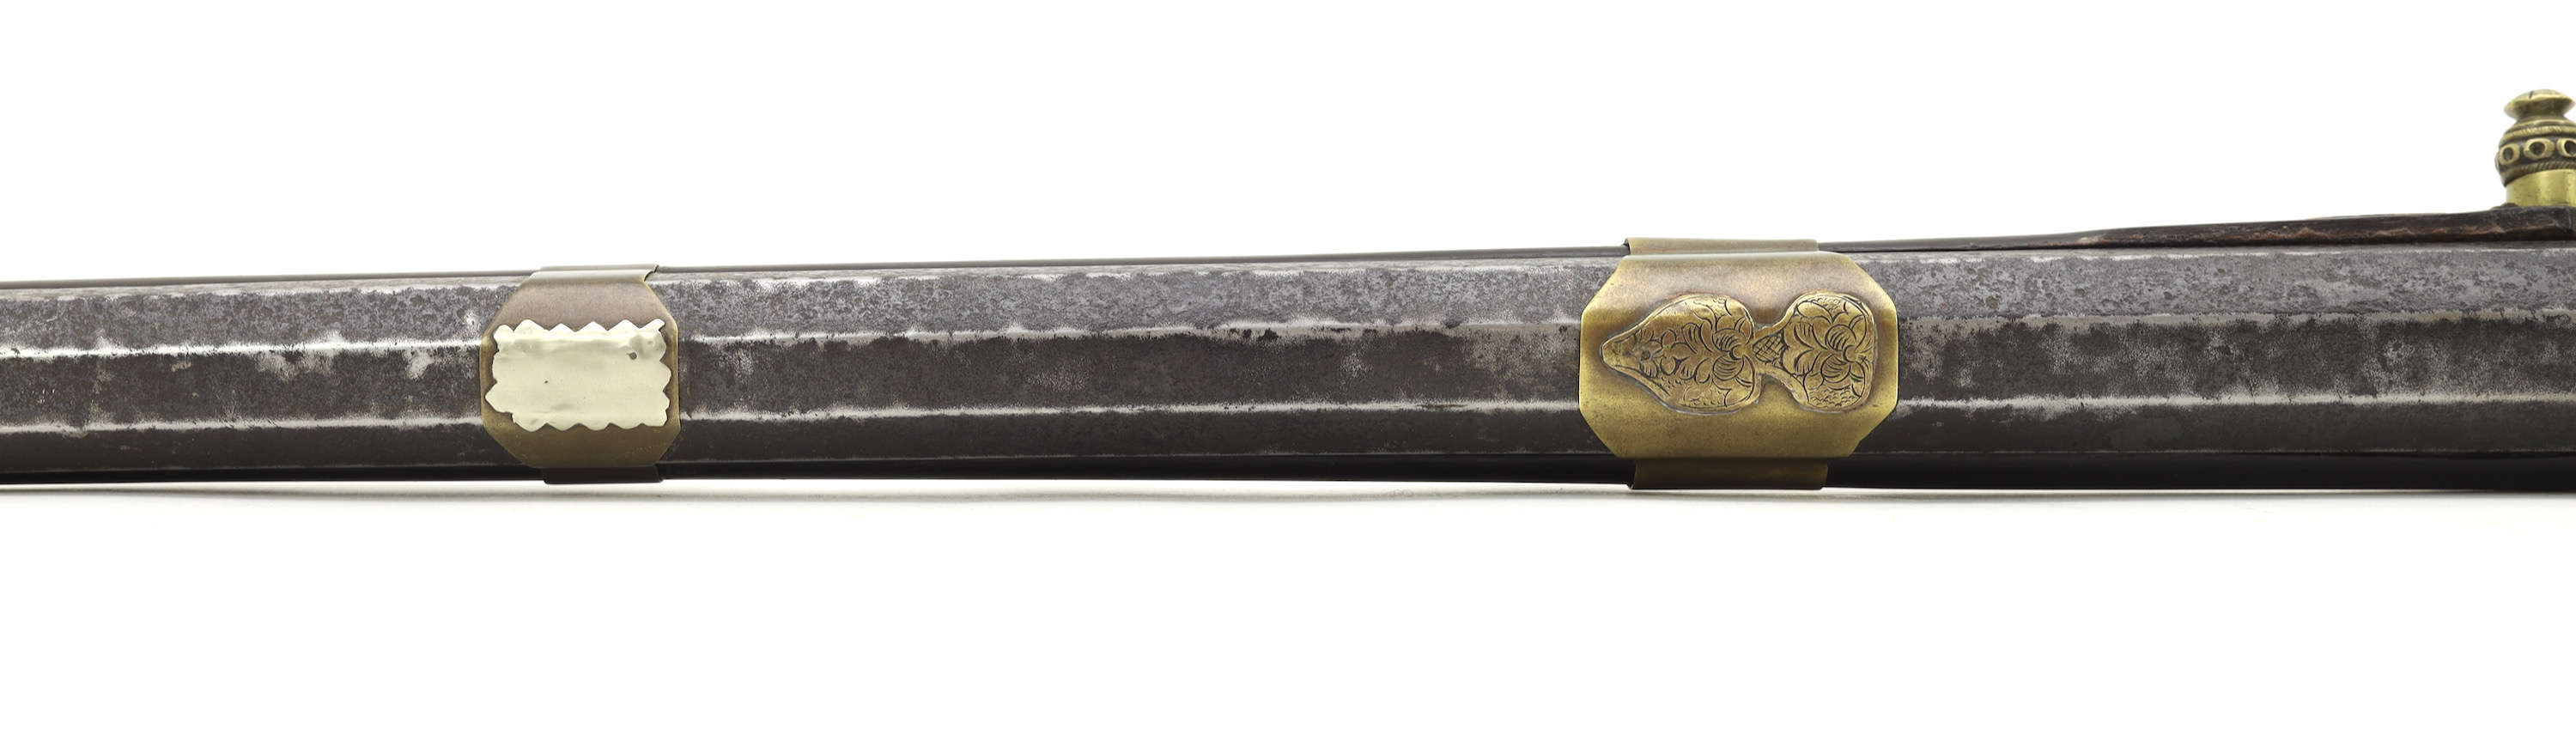 Padri gun from Sumatra